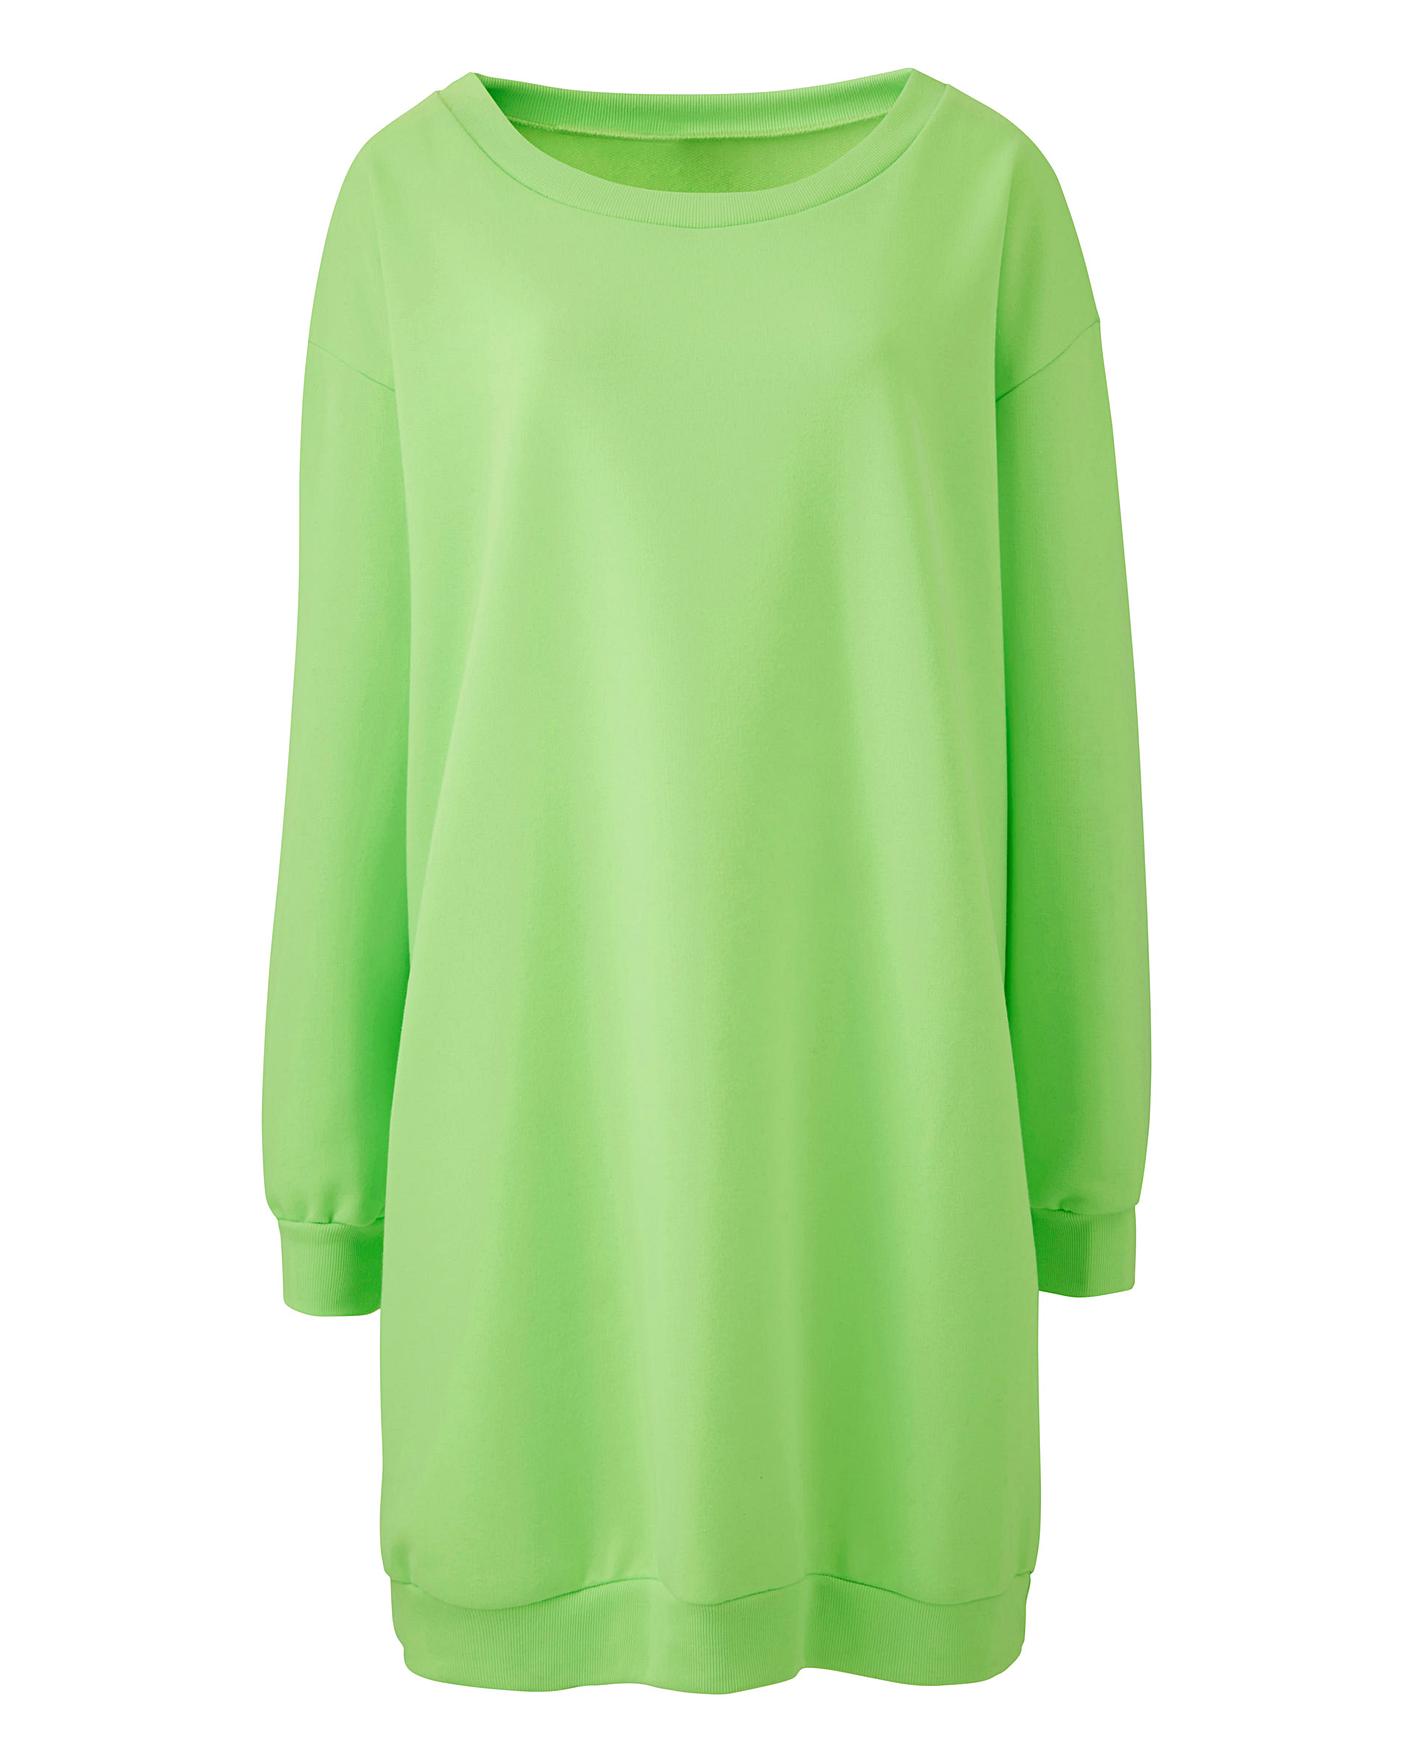 AX Paris Neon Green Plain Jumper Dress